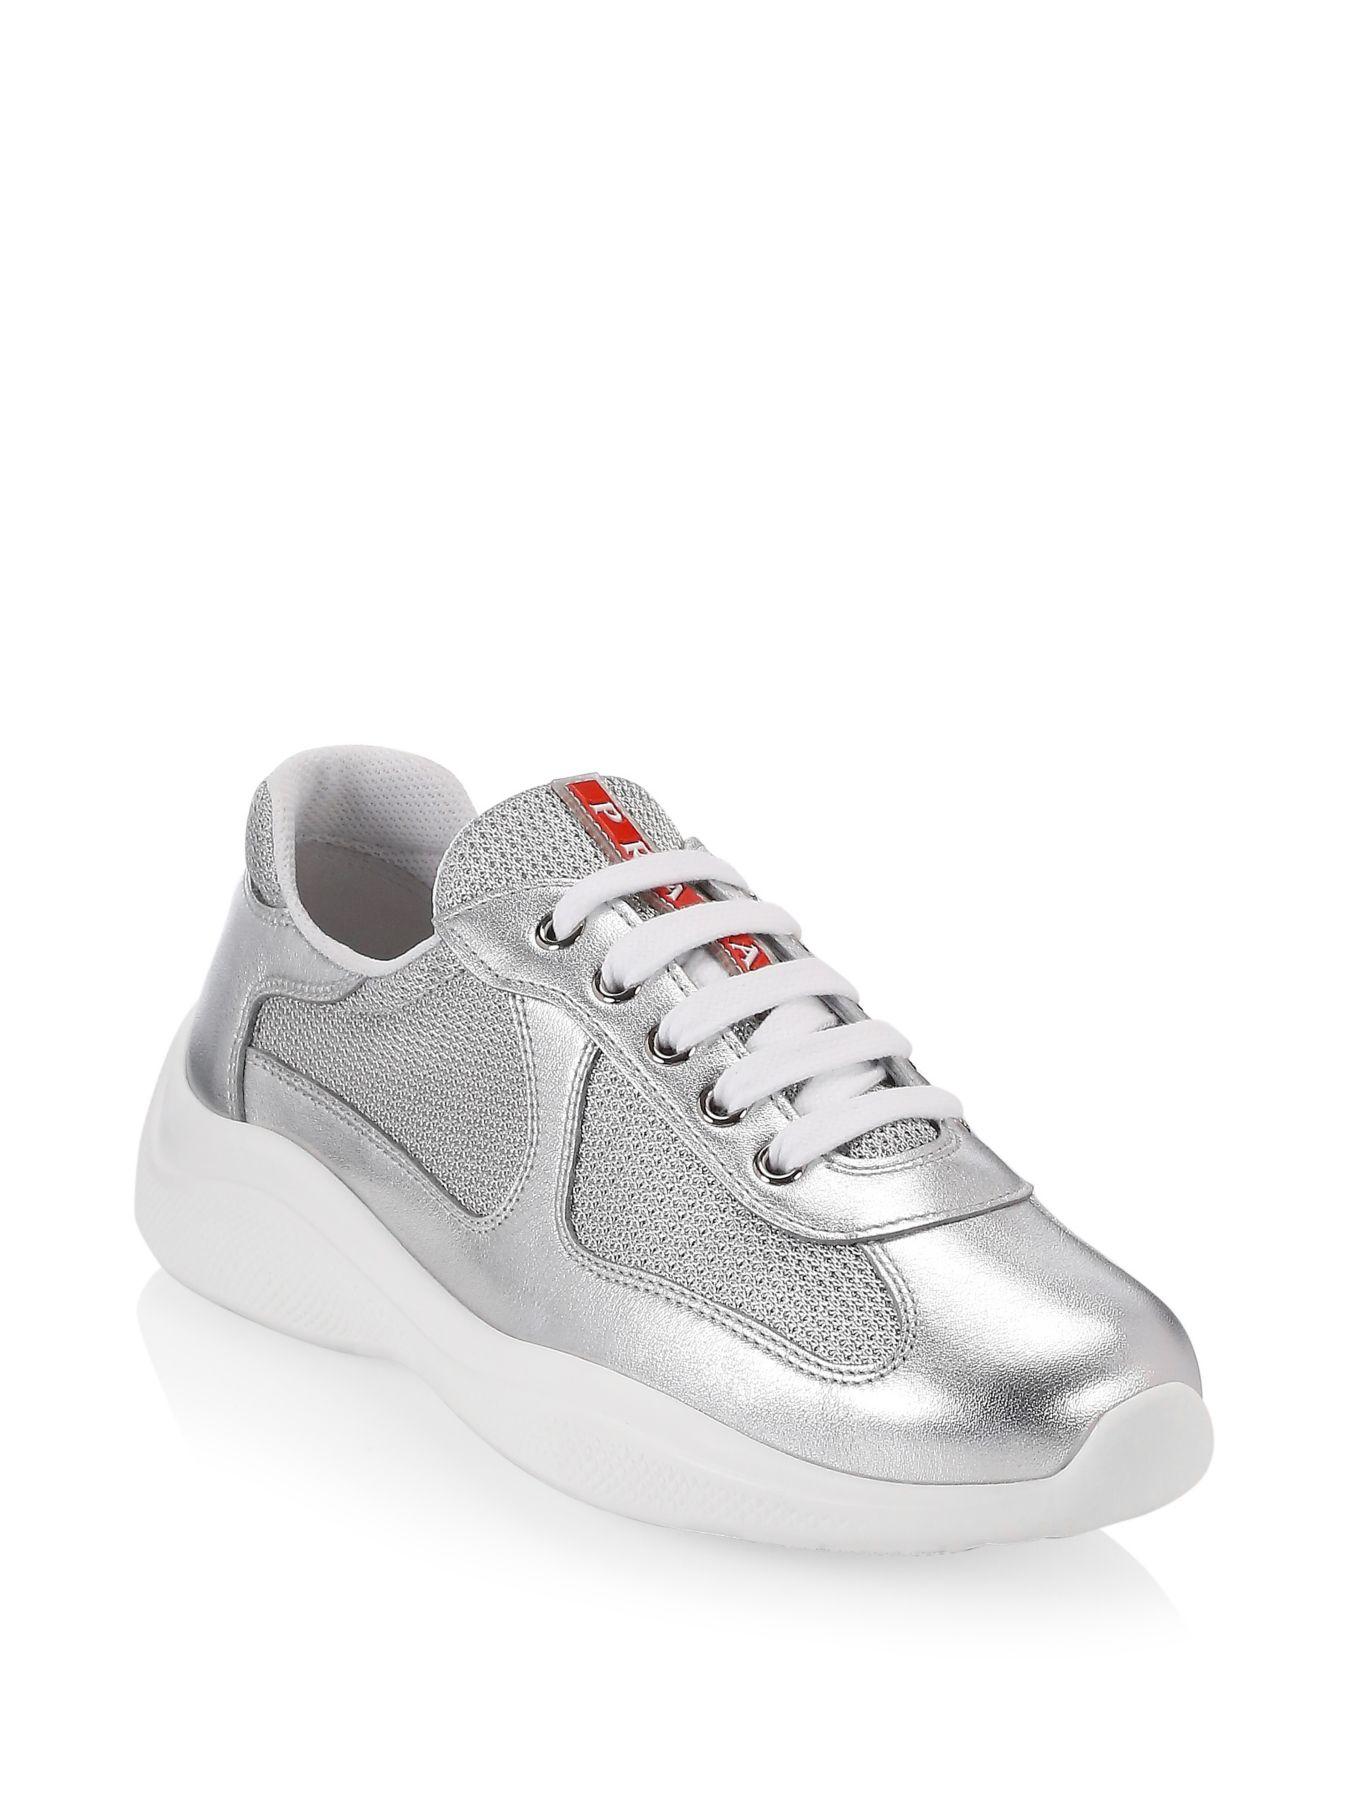 Prada Leather Fabric Sneaker White 